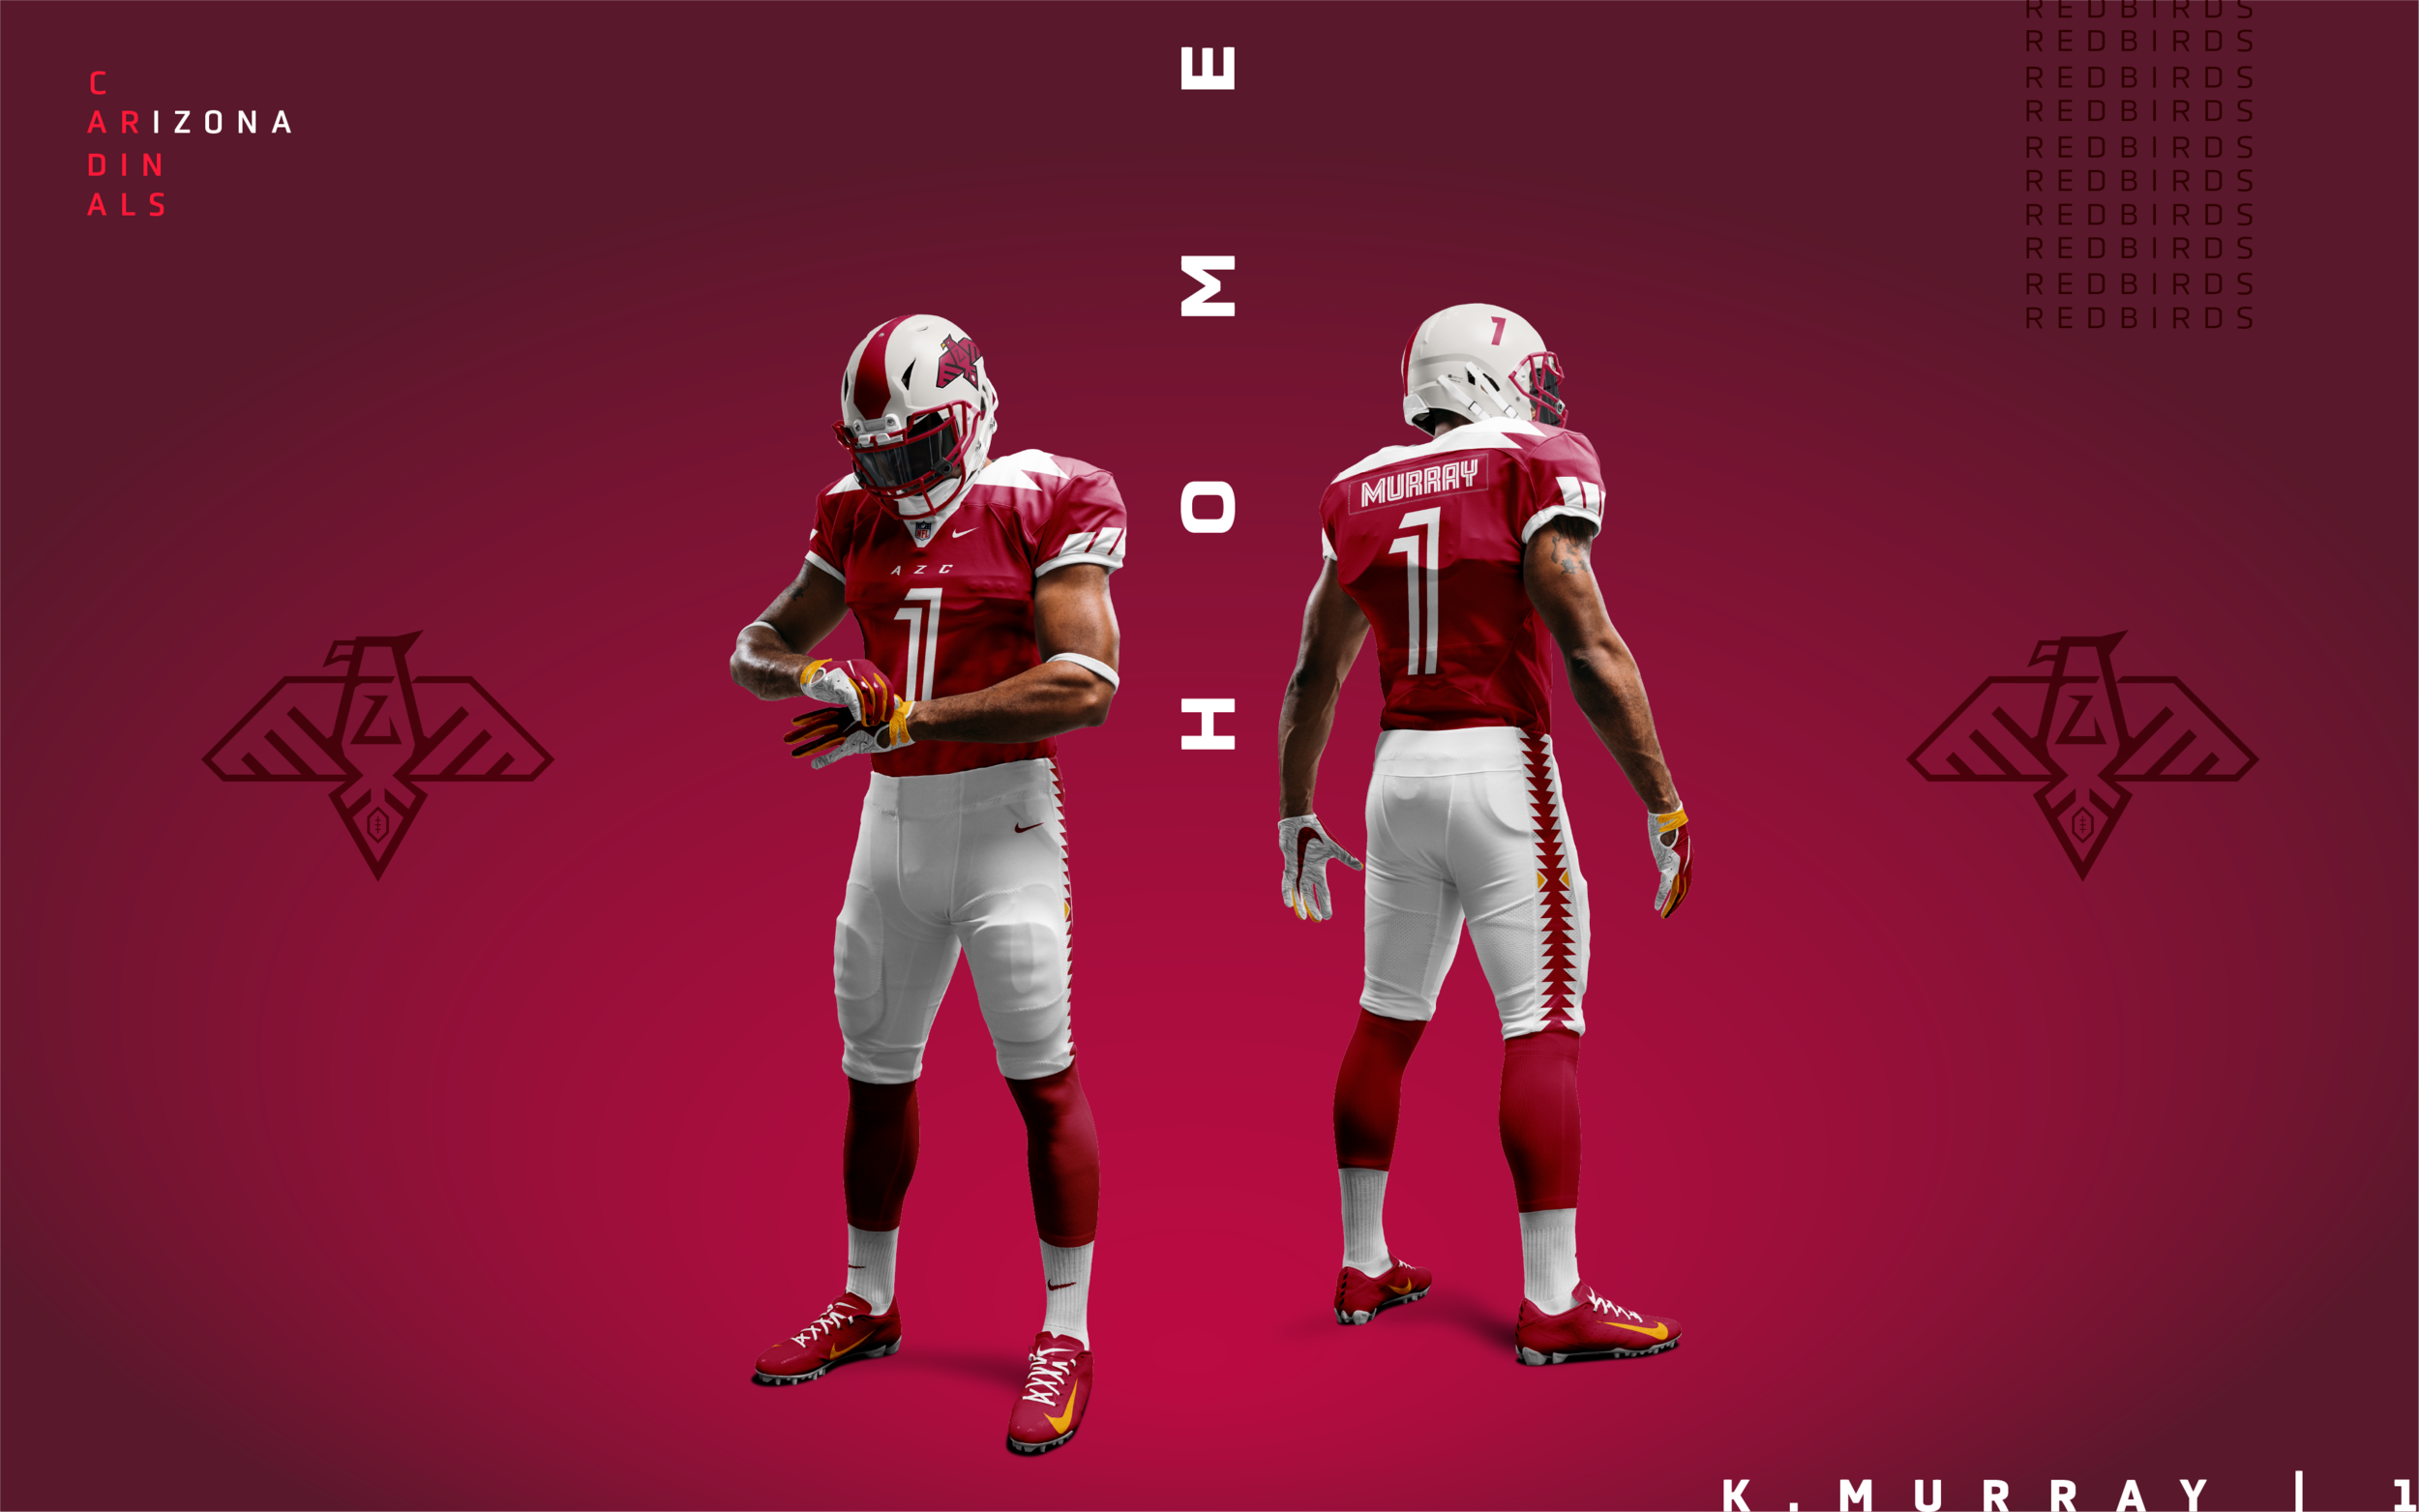 arizona cardinals new uniforms concept